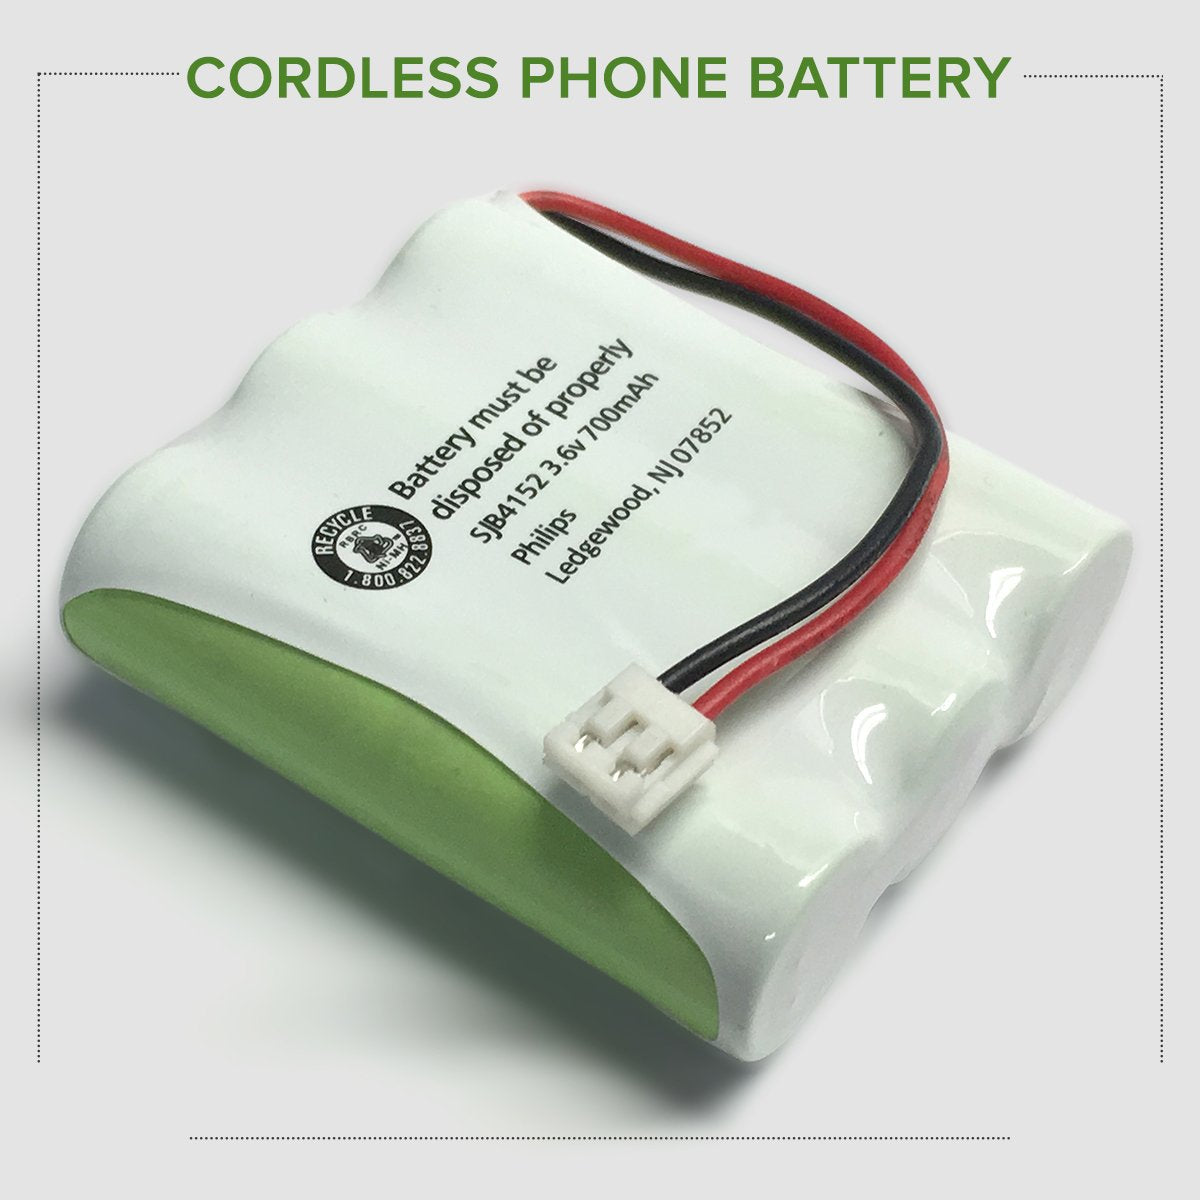 AT&T  HS-8210 Cordless Phone Battery